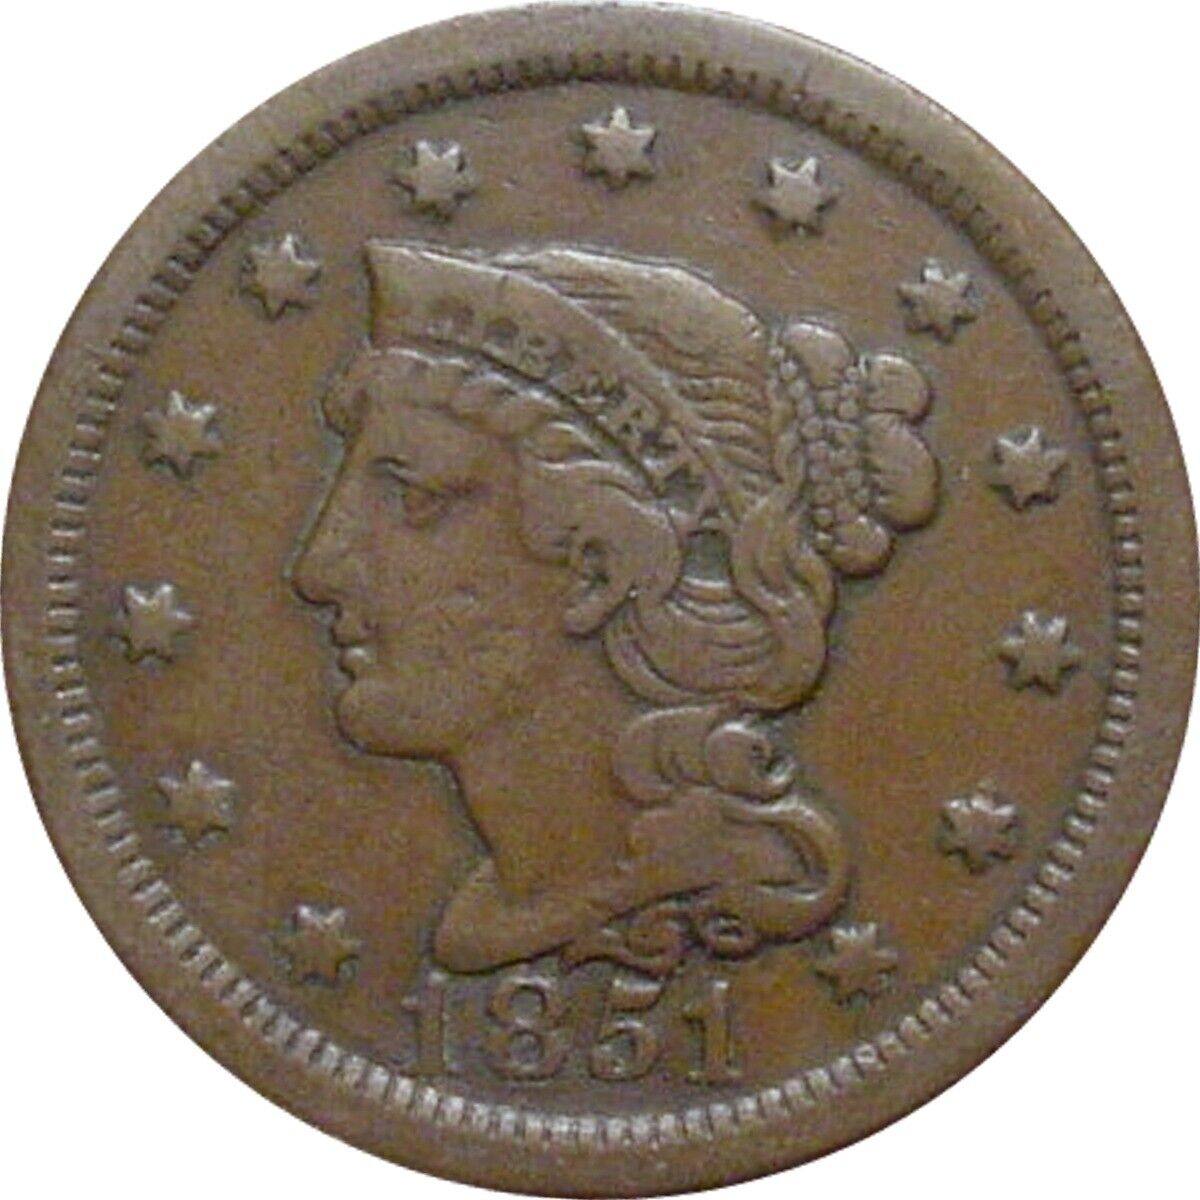 1851 Braided Cent--Fine Max 58% OFF shipfree Very Fine